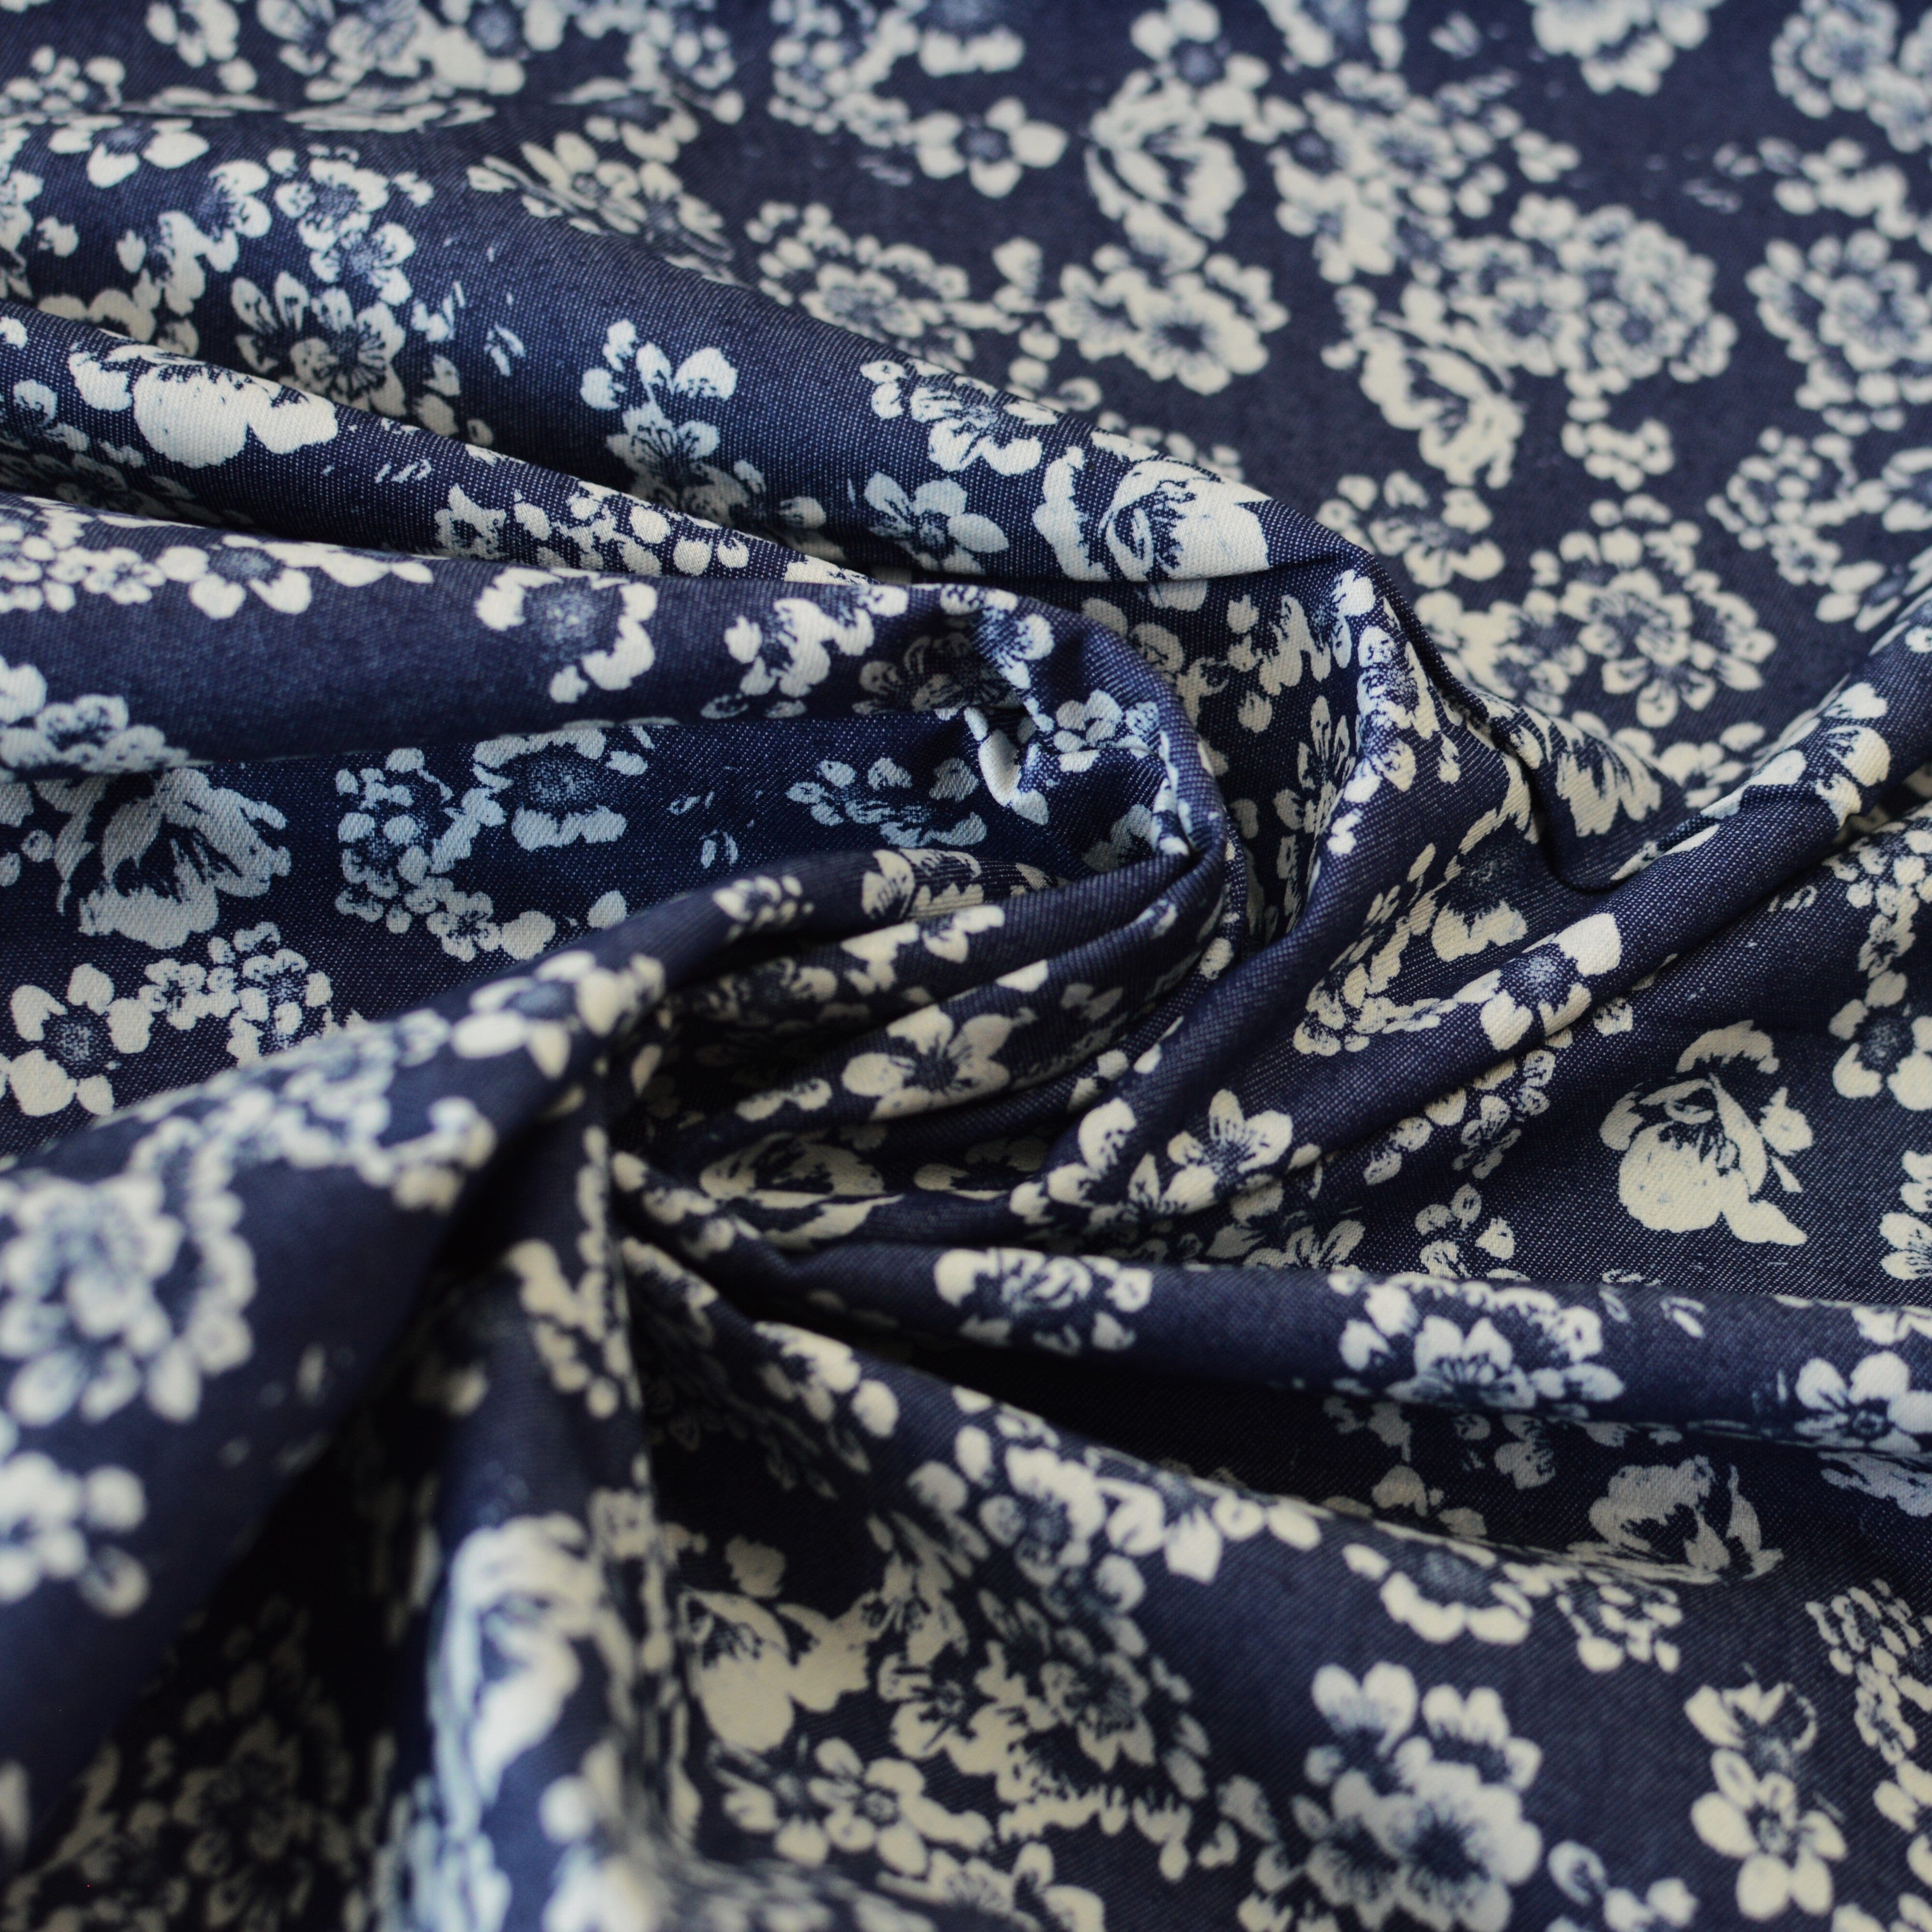 Chambray - Sea of Flowers - Indigo jeansblau mit weißen Blüten - Baumwollmix Webware Fabric poshpinks